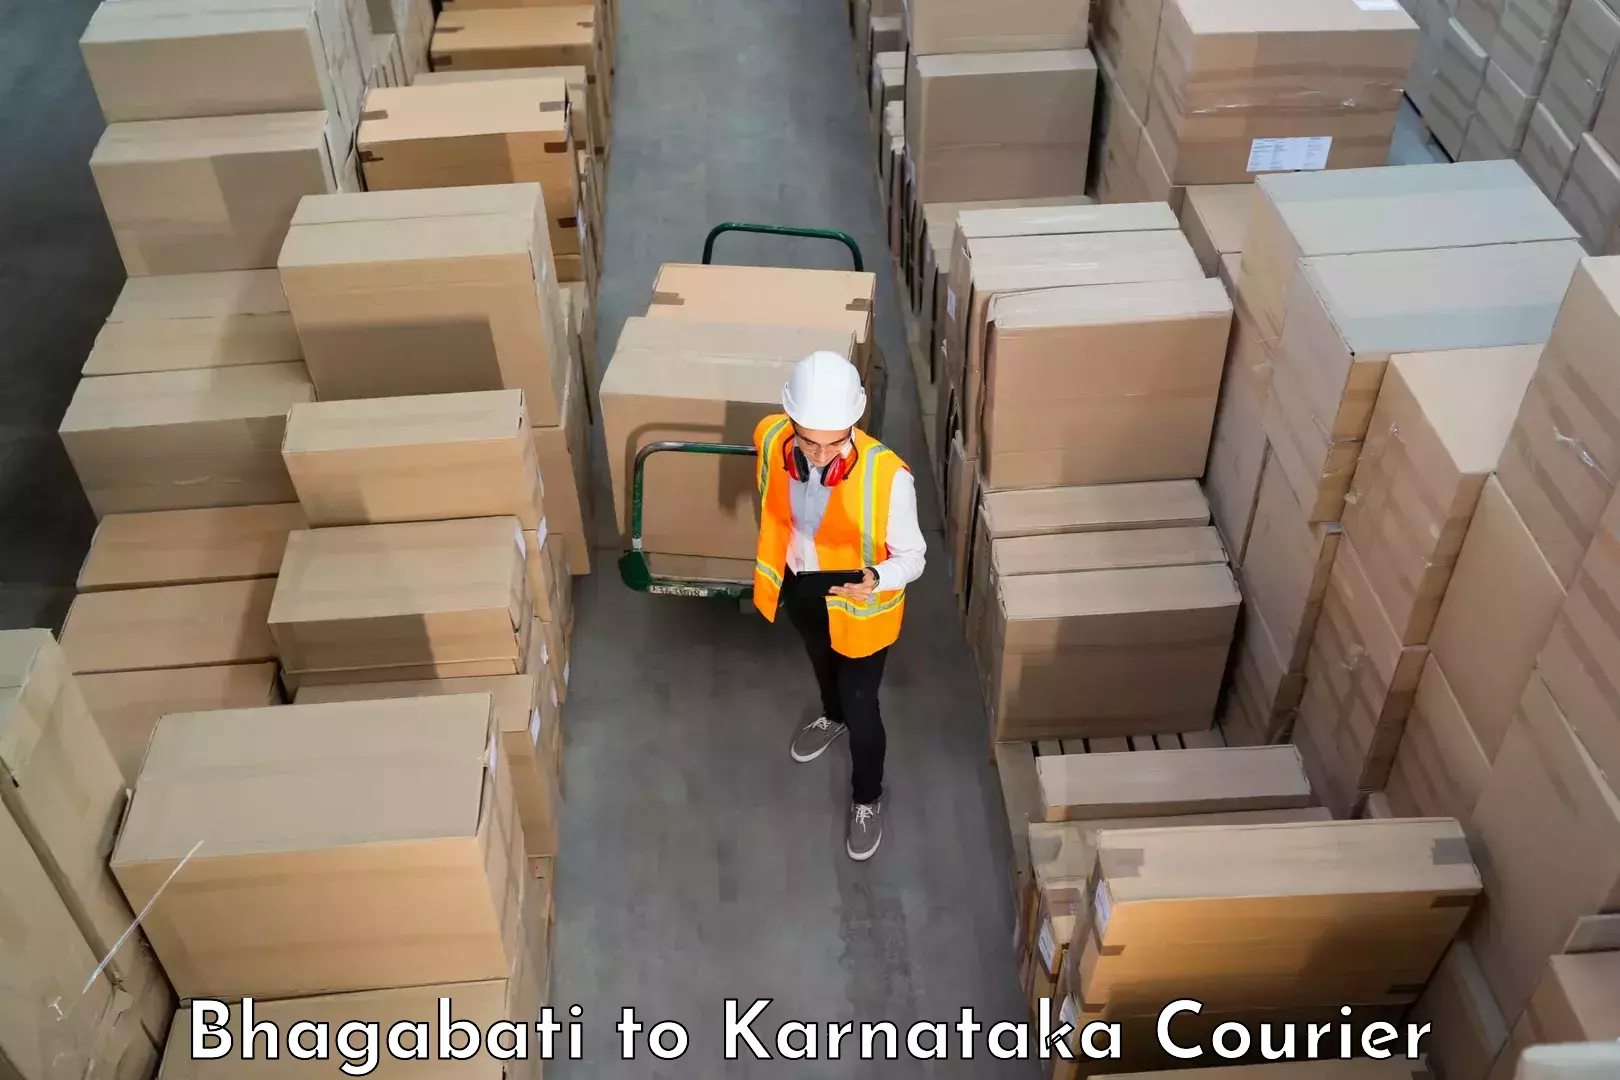 Moving and packing experts Bhagabati to Channagiri